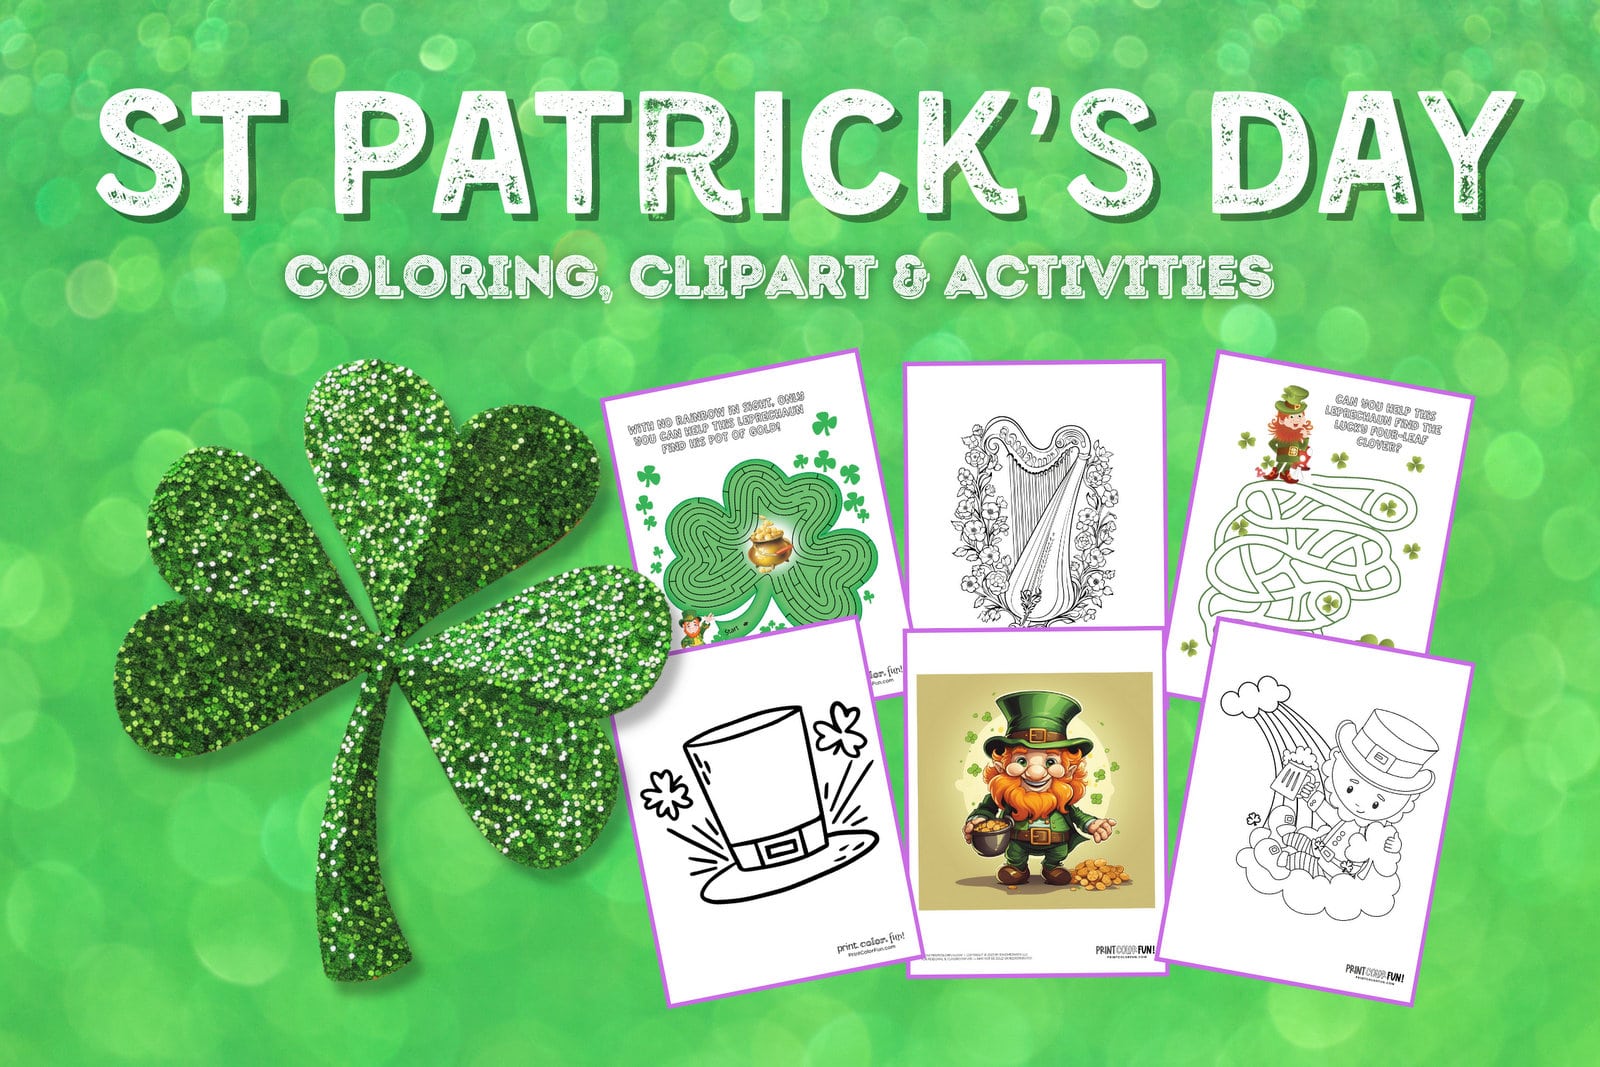 St Patrick's Day coloring and activities at PrintColorFun com